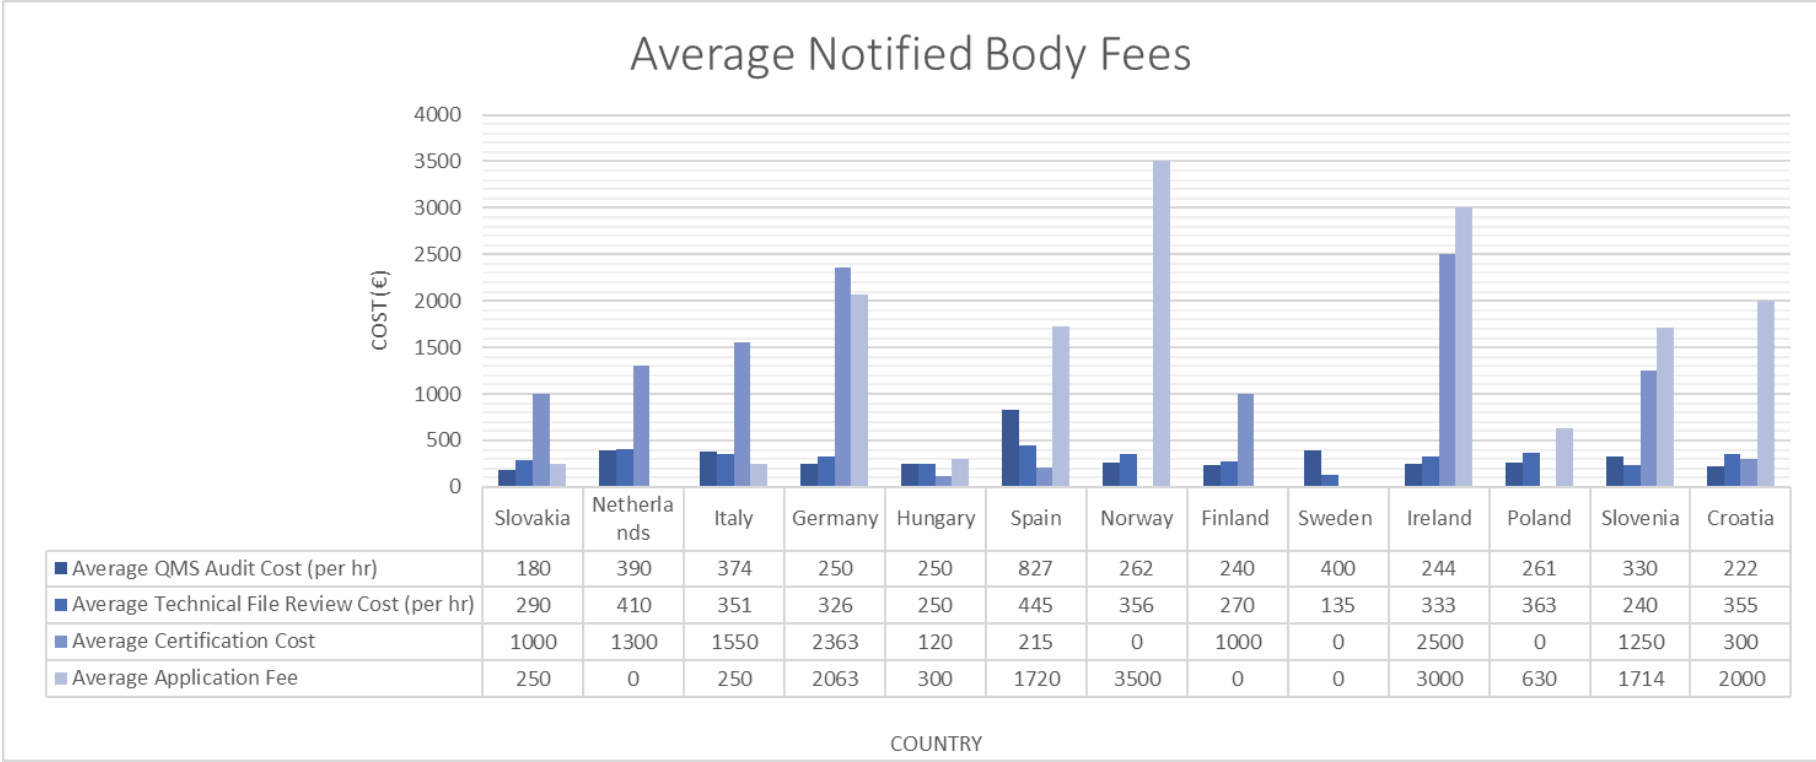 Average Notified Body Fees